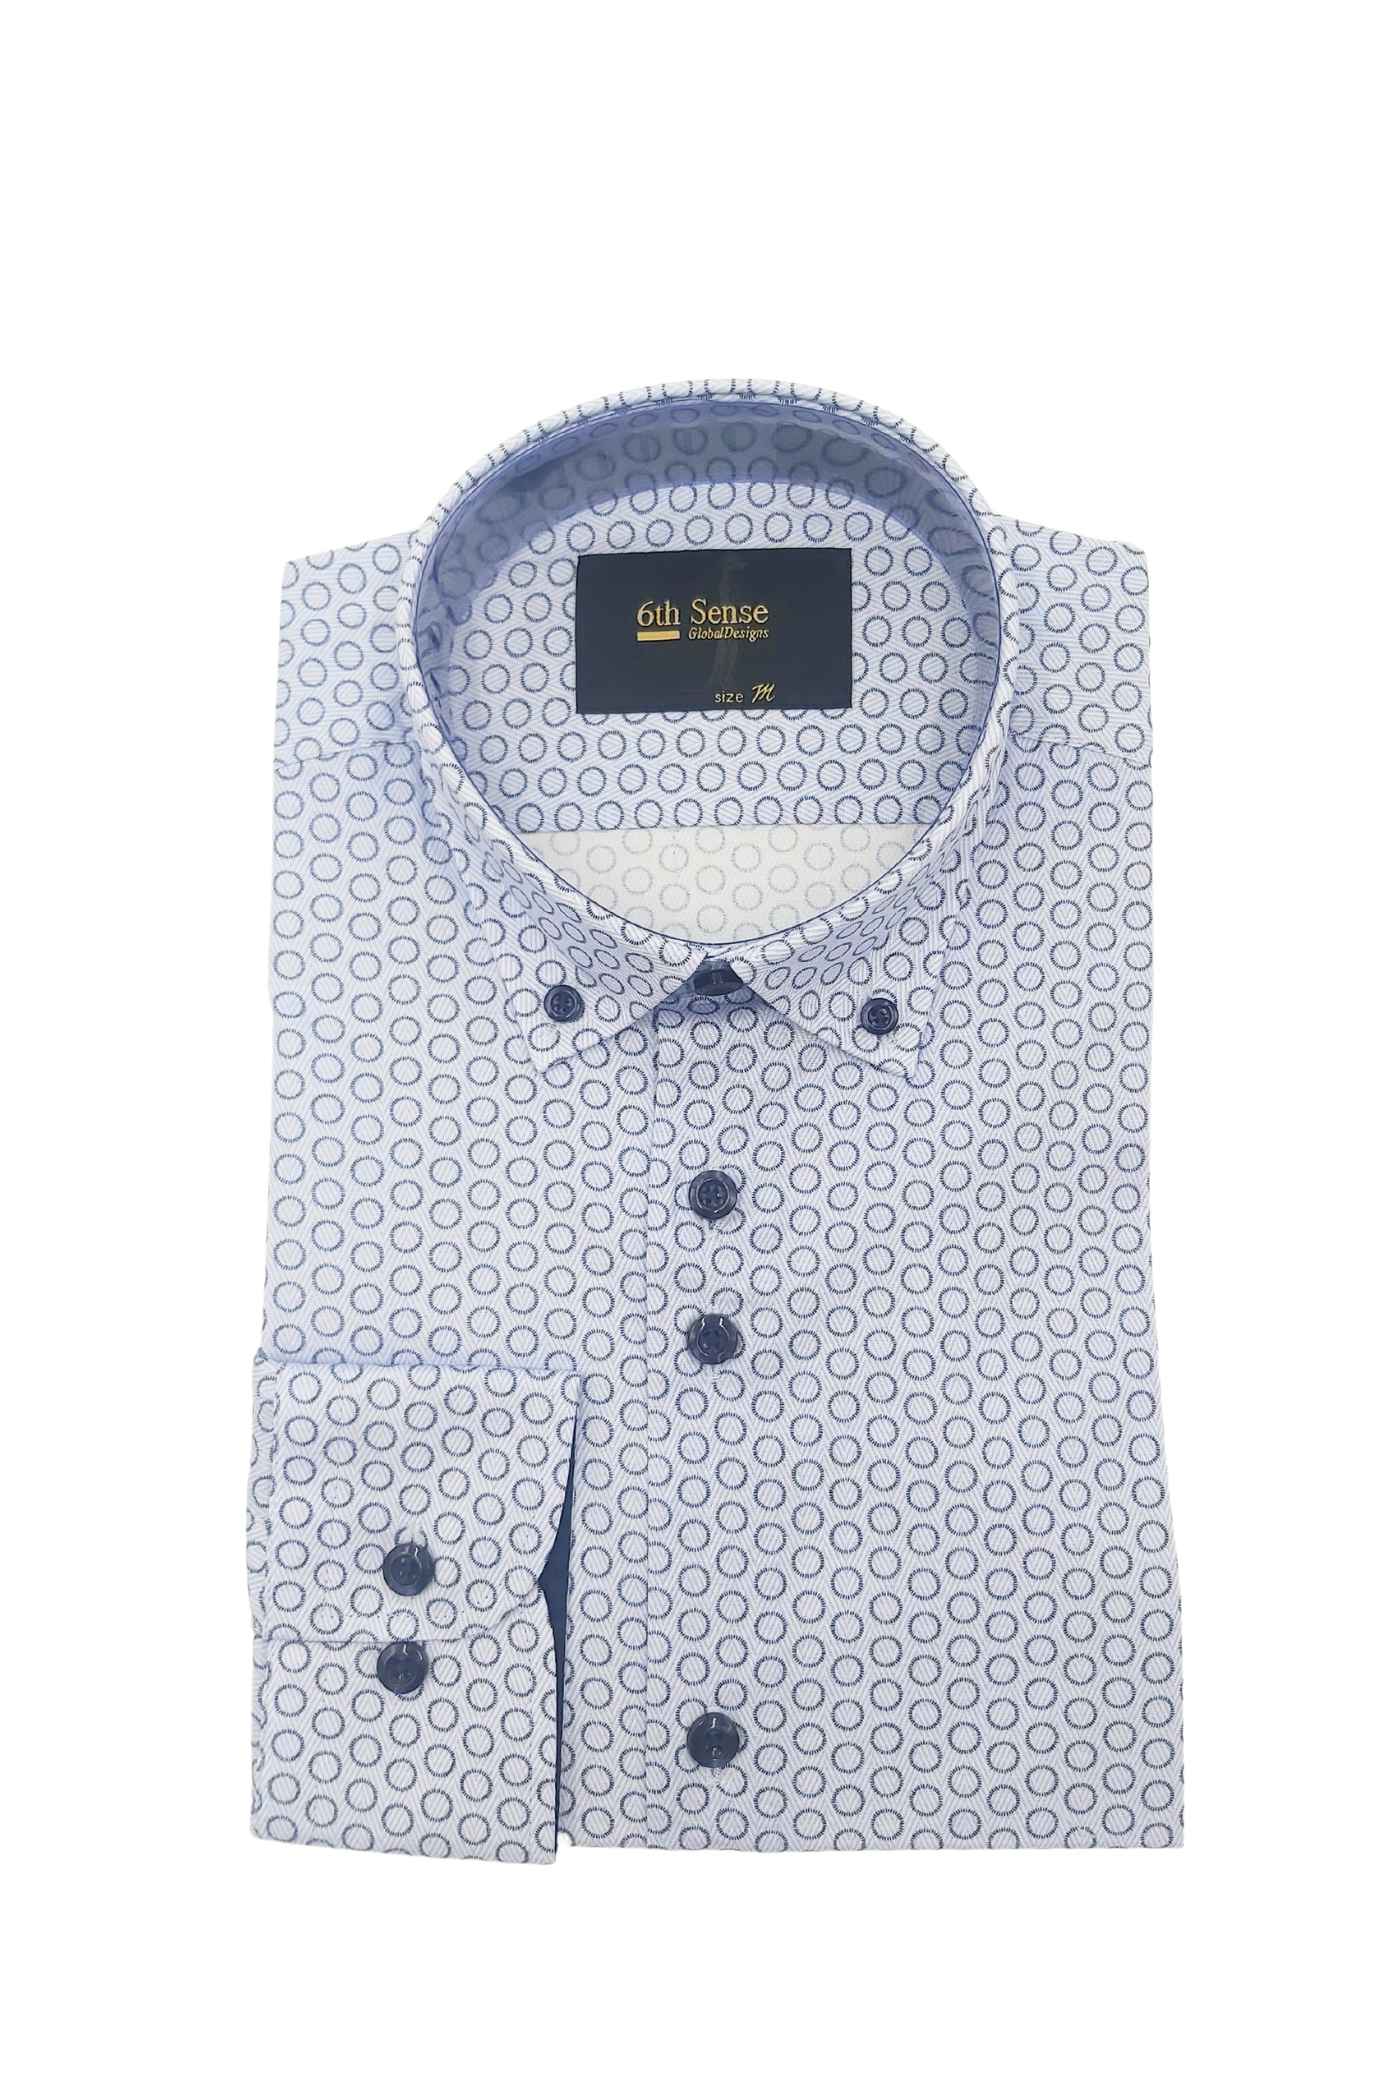 Men's Button Down Blue/Navy Circle Print Shirt-Front View